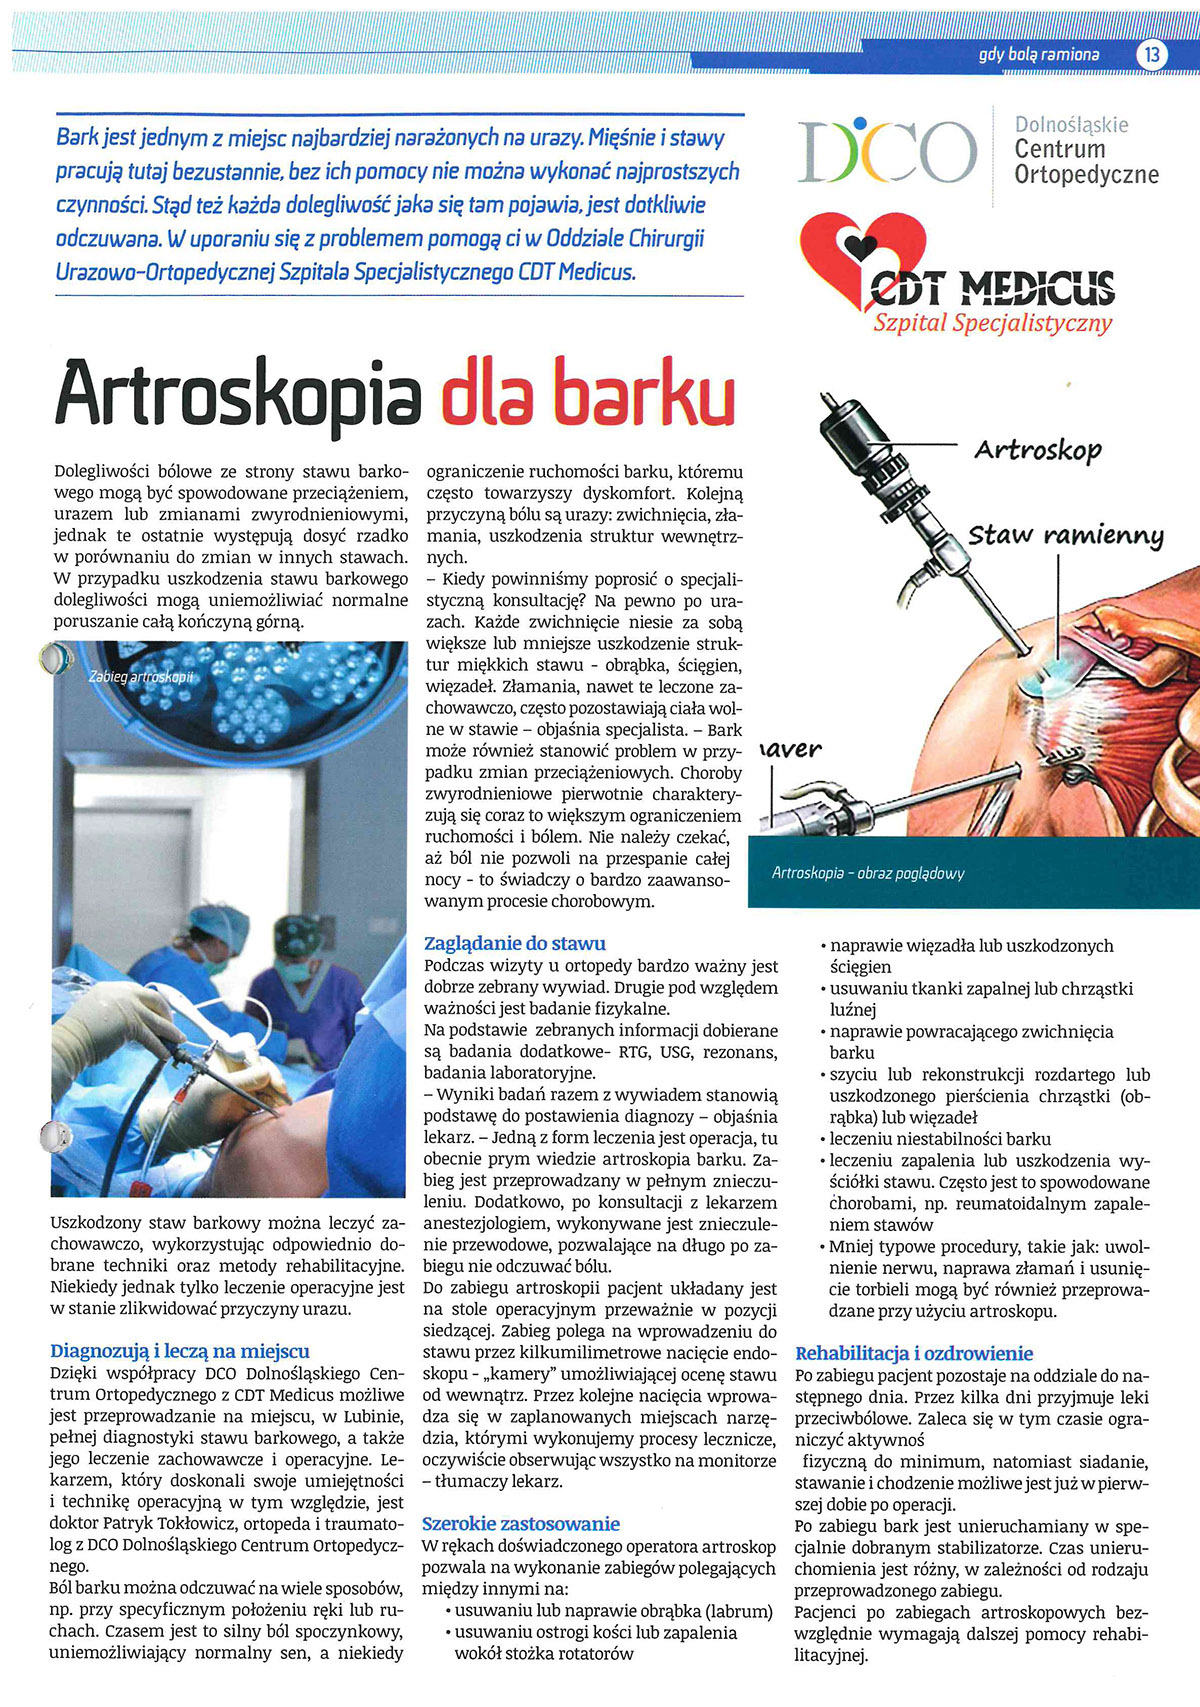 artroskopia-barku-w-szpitalu-cdt-medicus-lubin    